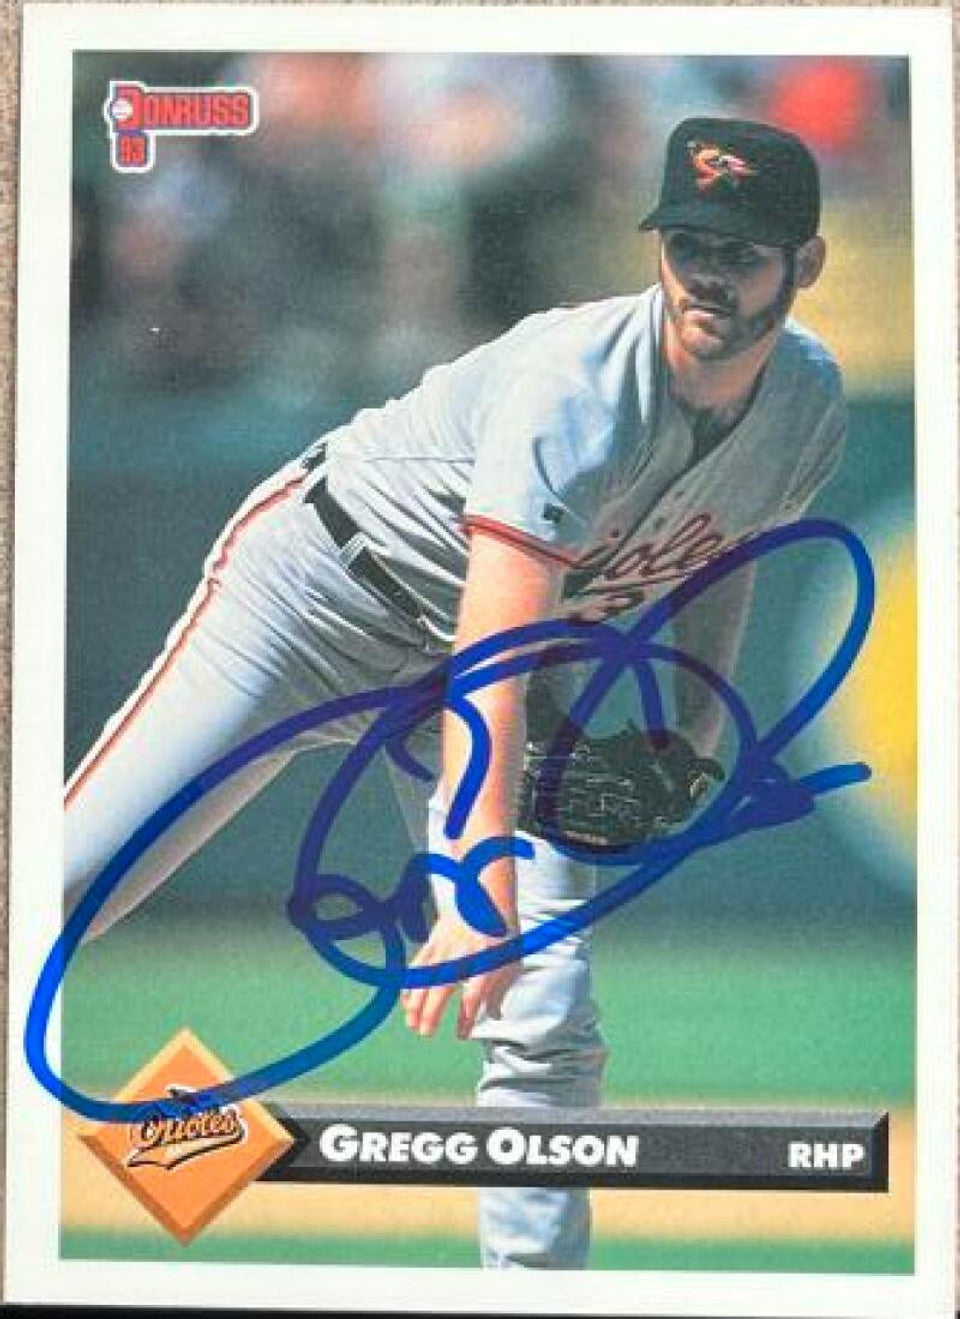 Gregg Olson Signed 1993 Donruss Baseball Card - Baltimore Orioles